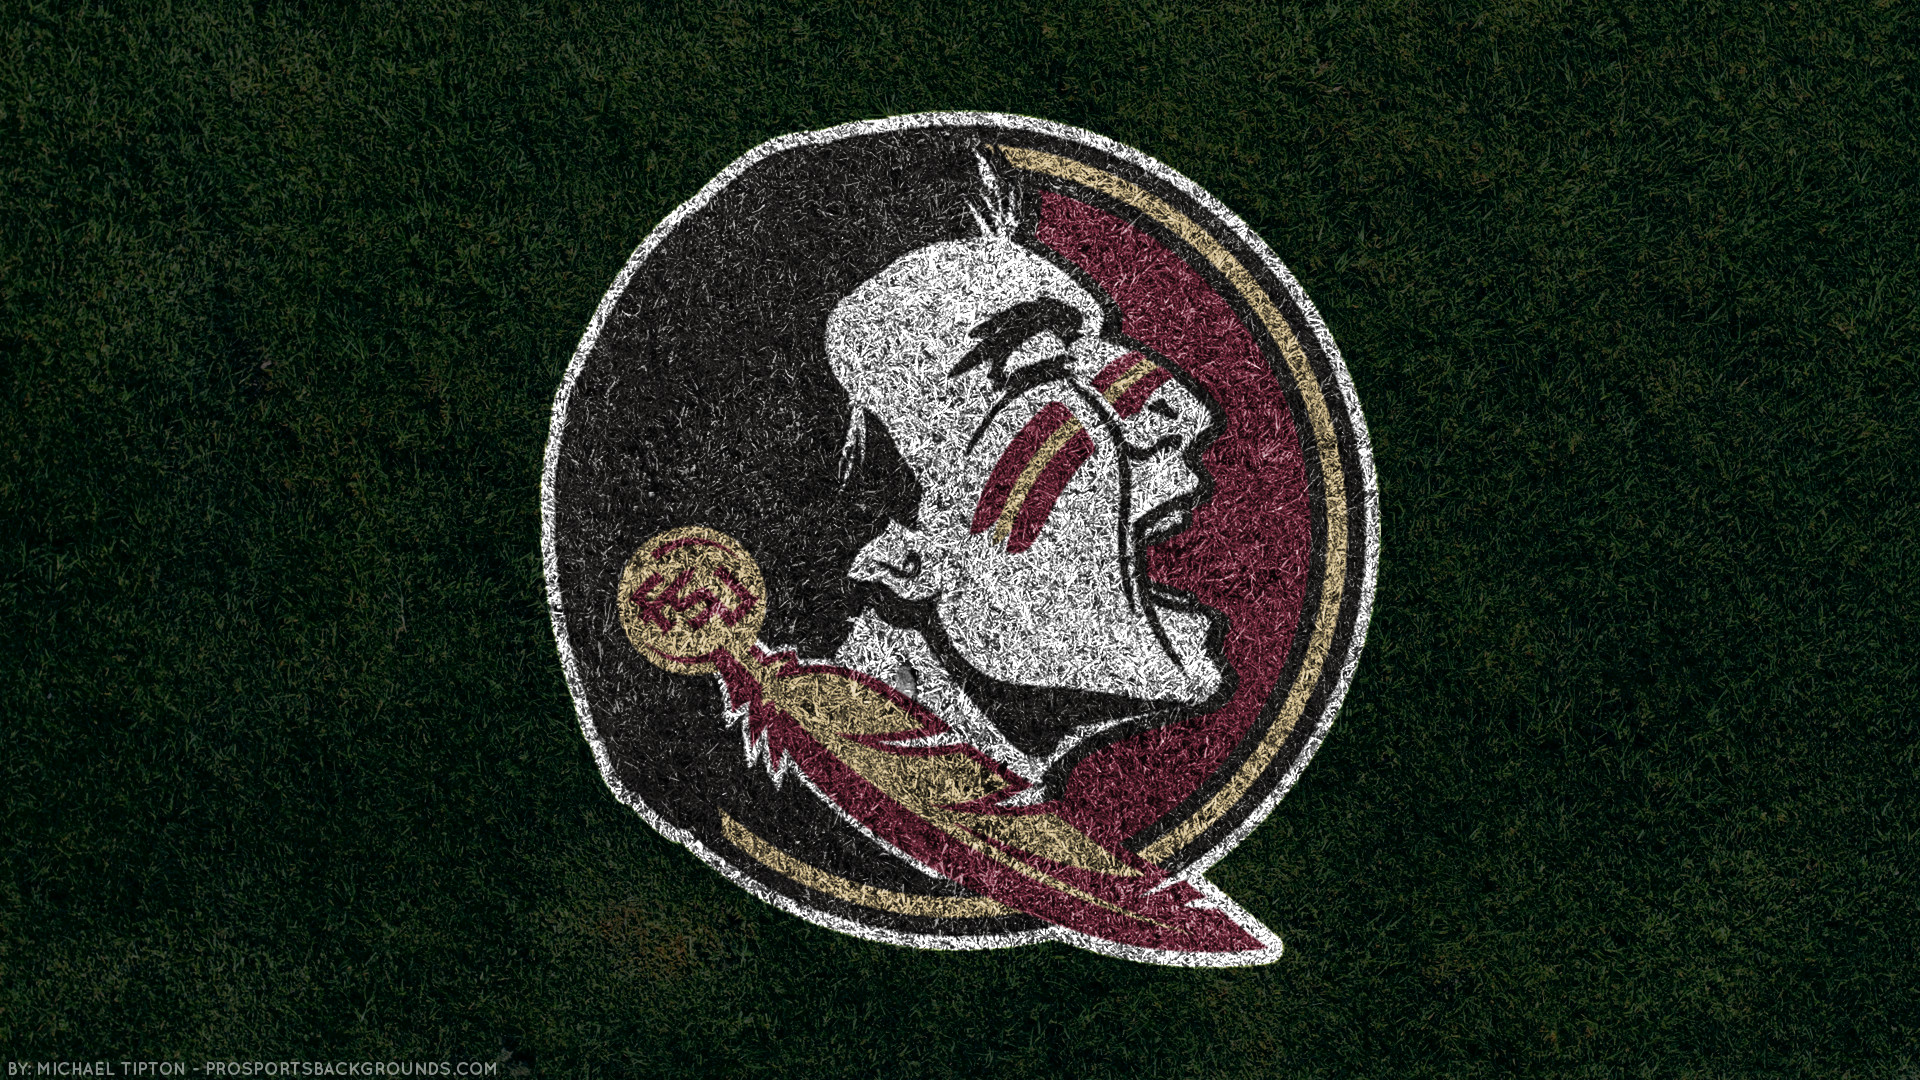 1920x1080 Florida State Seminoles 2018 ncaa football team logo grass wallpaper free  for mac and desktop pc ...